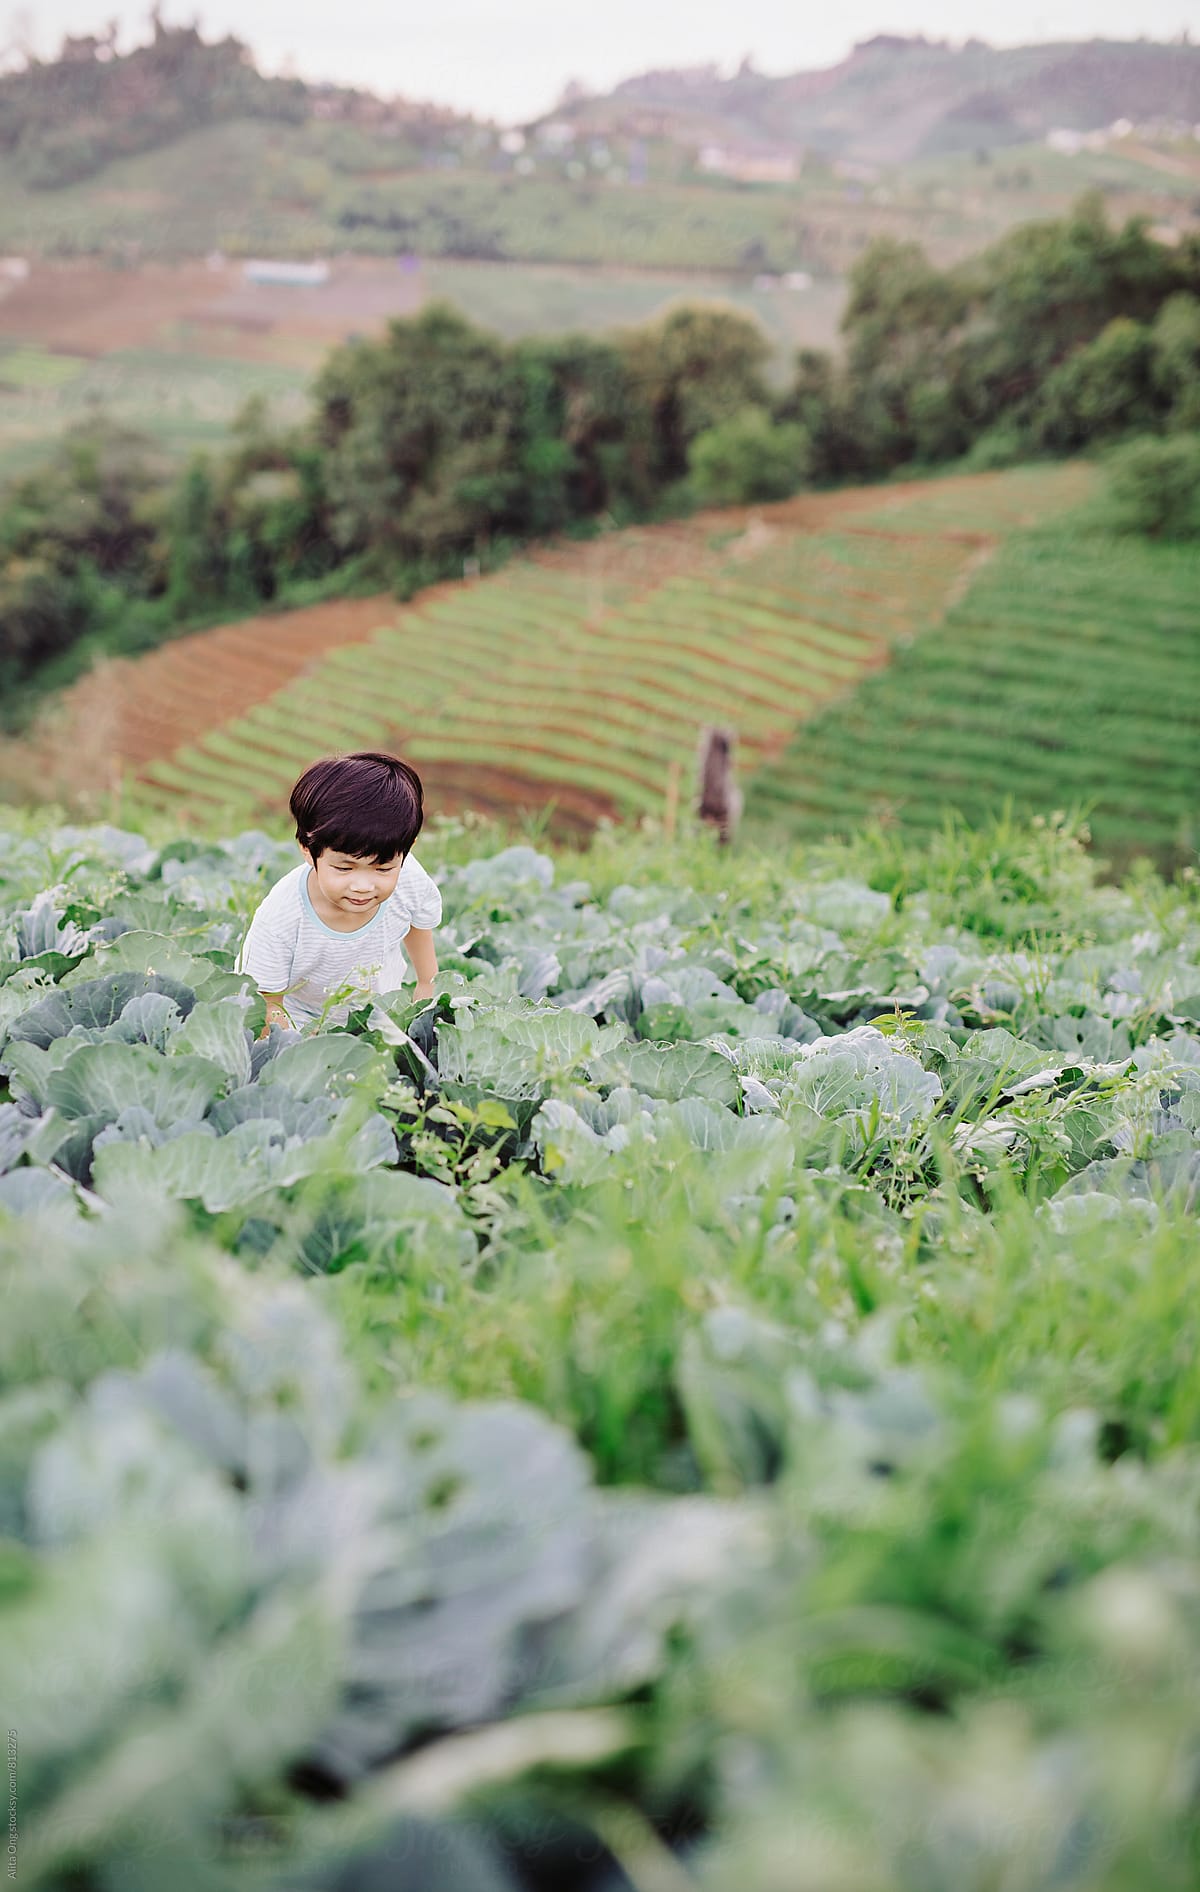 Little child at vegetable farm